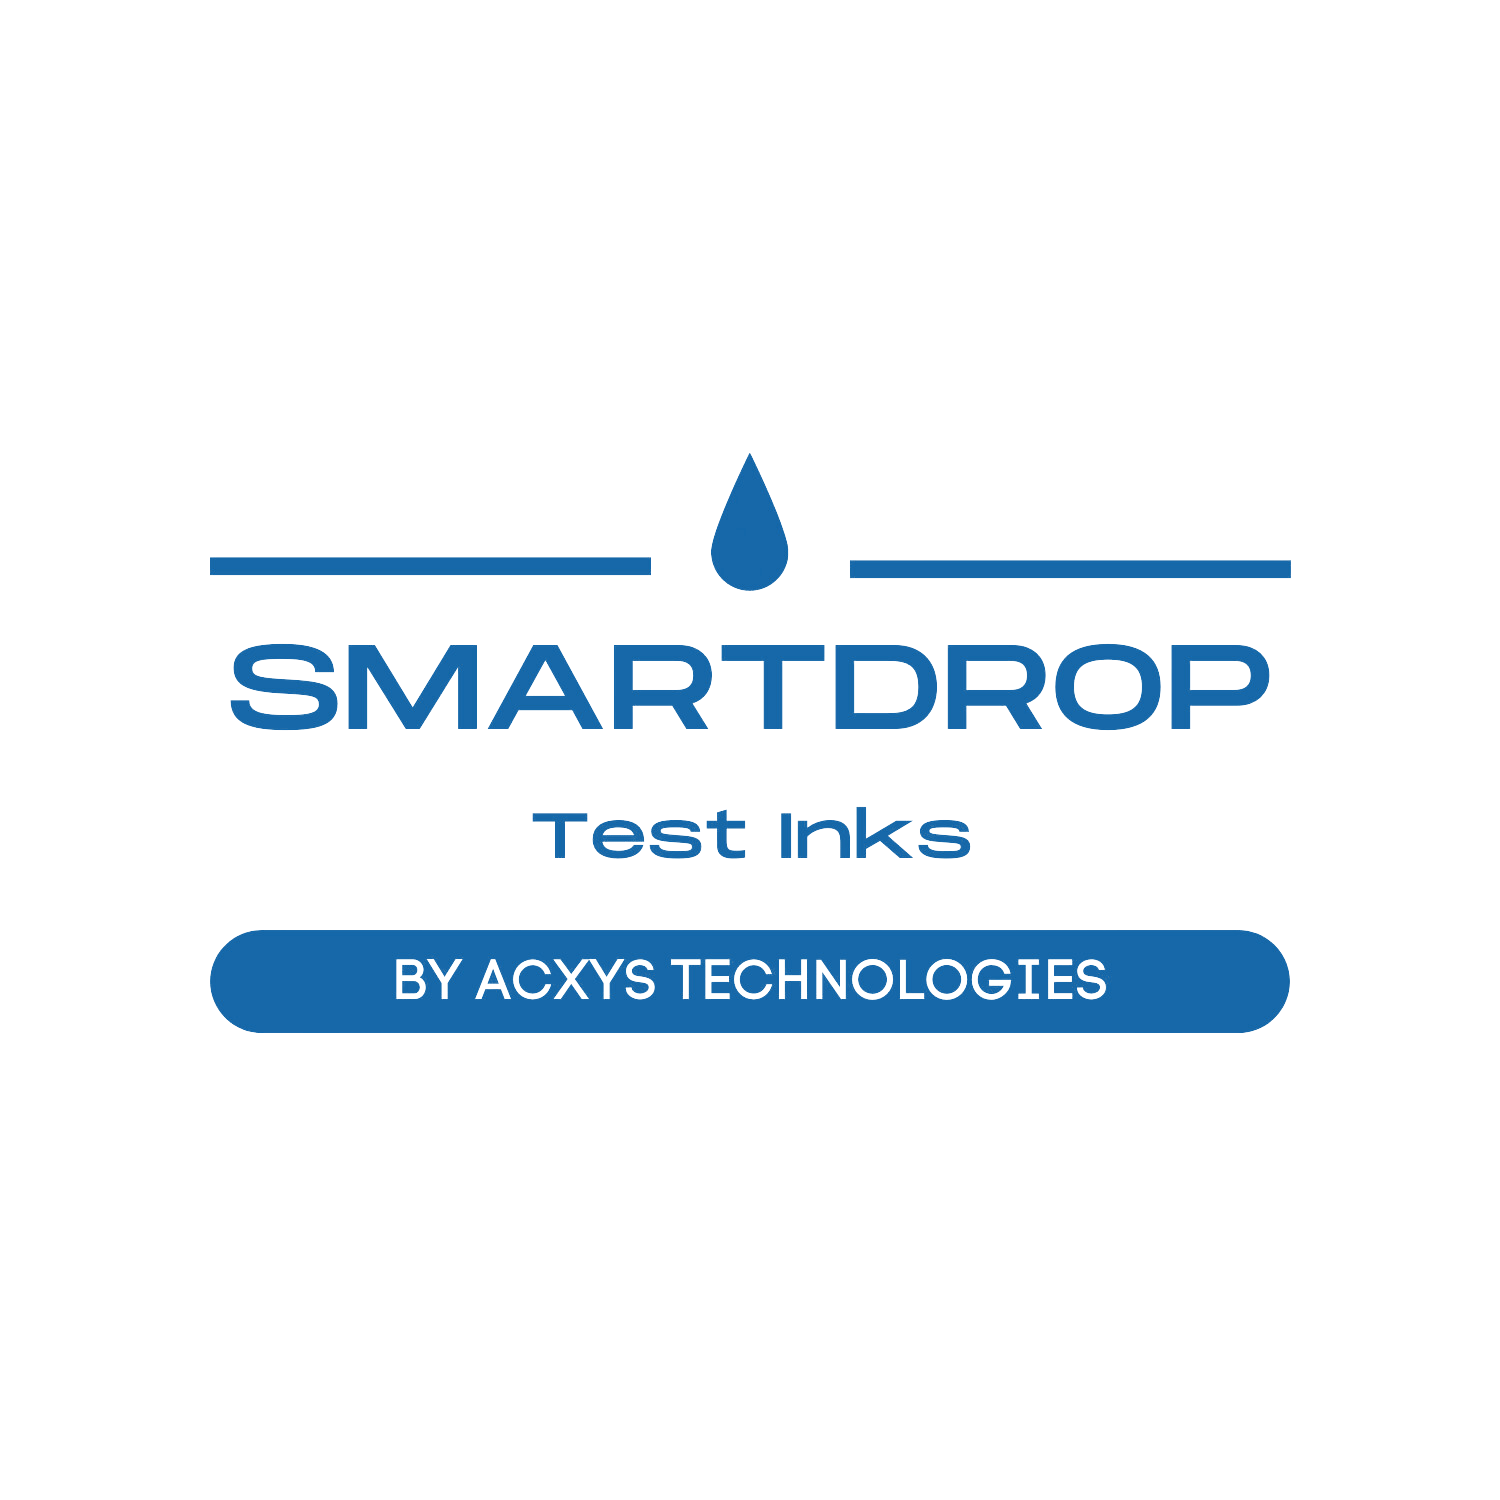 Acxys Technologies